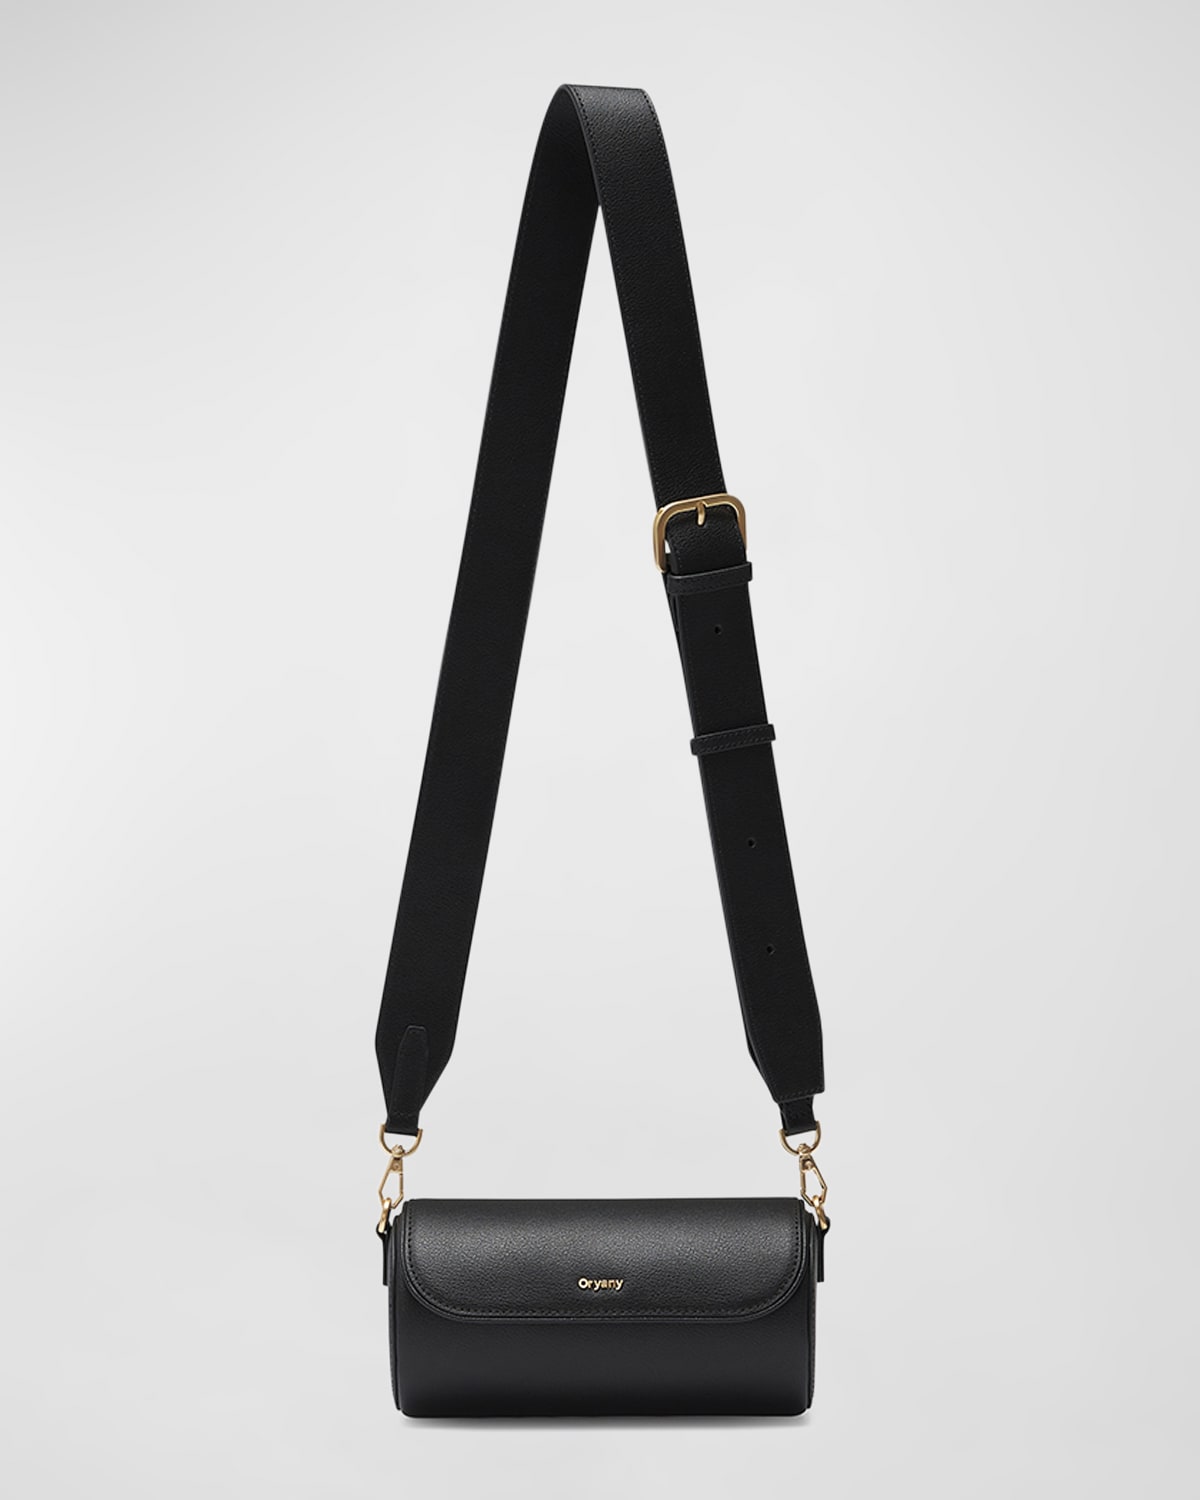 Oryany Giselle Flap Leather Crossbody Bag In Black